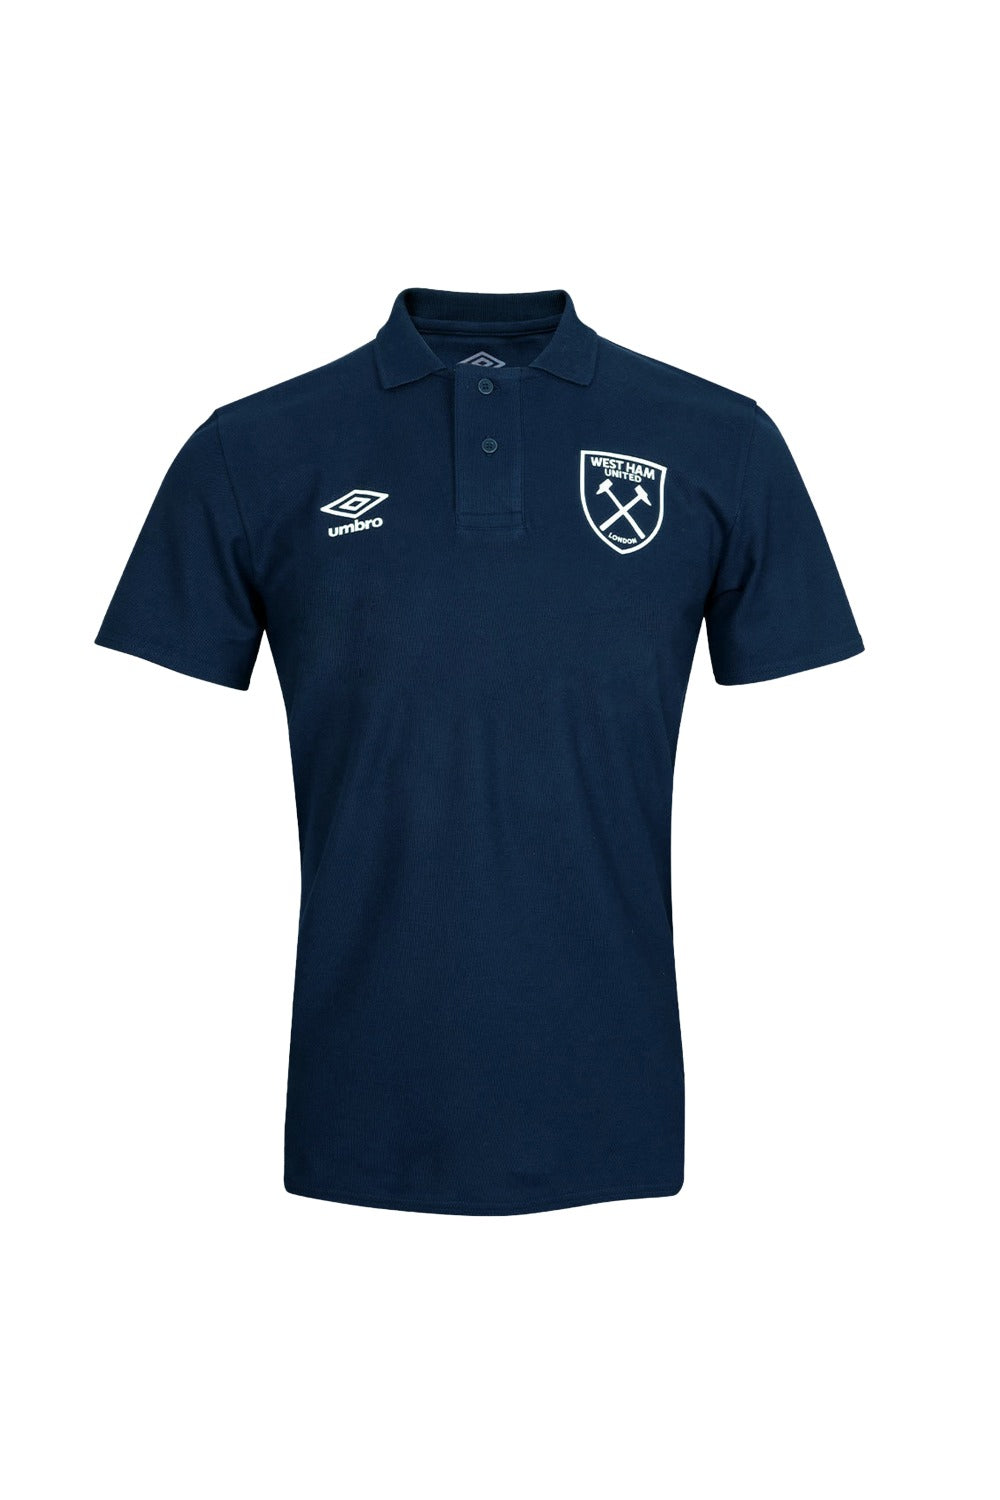 West Ham United FC Kids 22/23 Polo Shirt